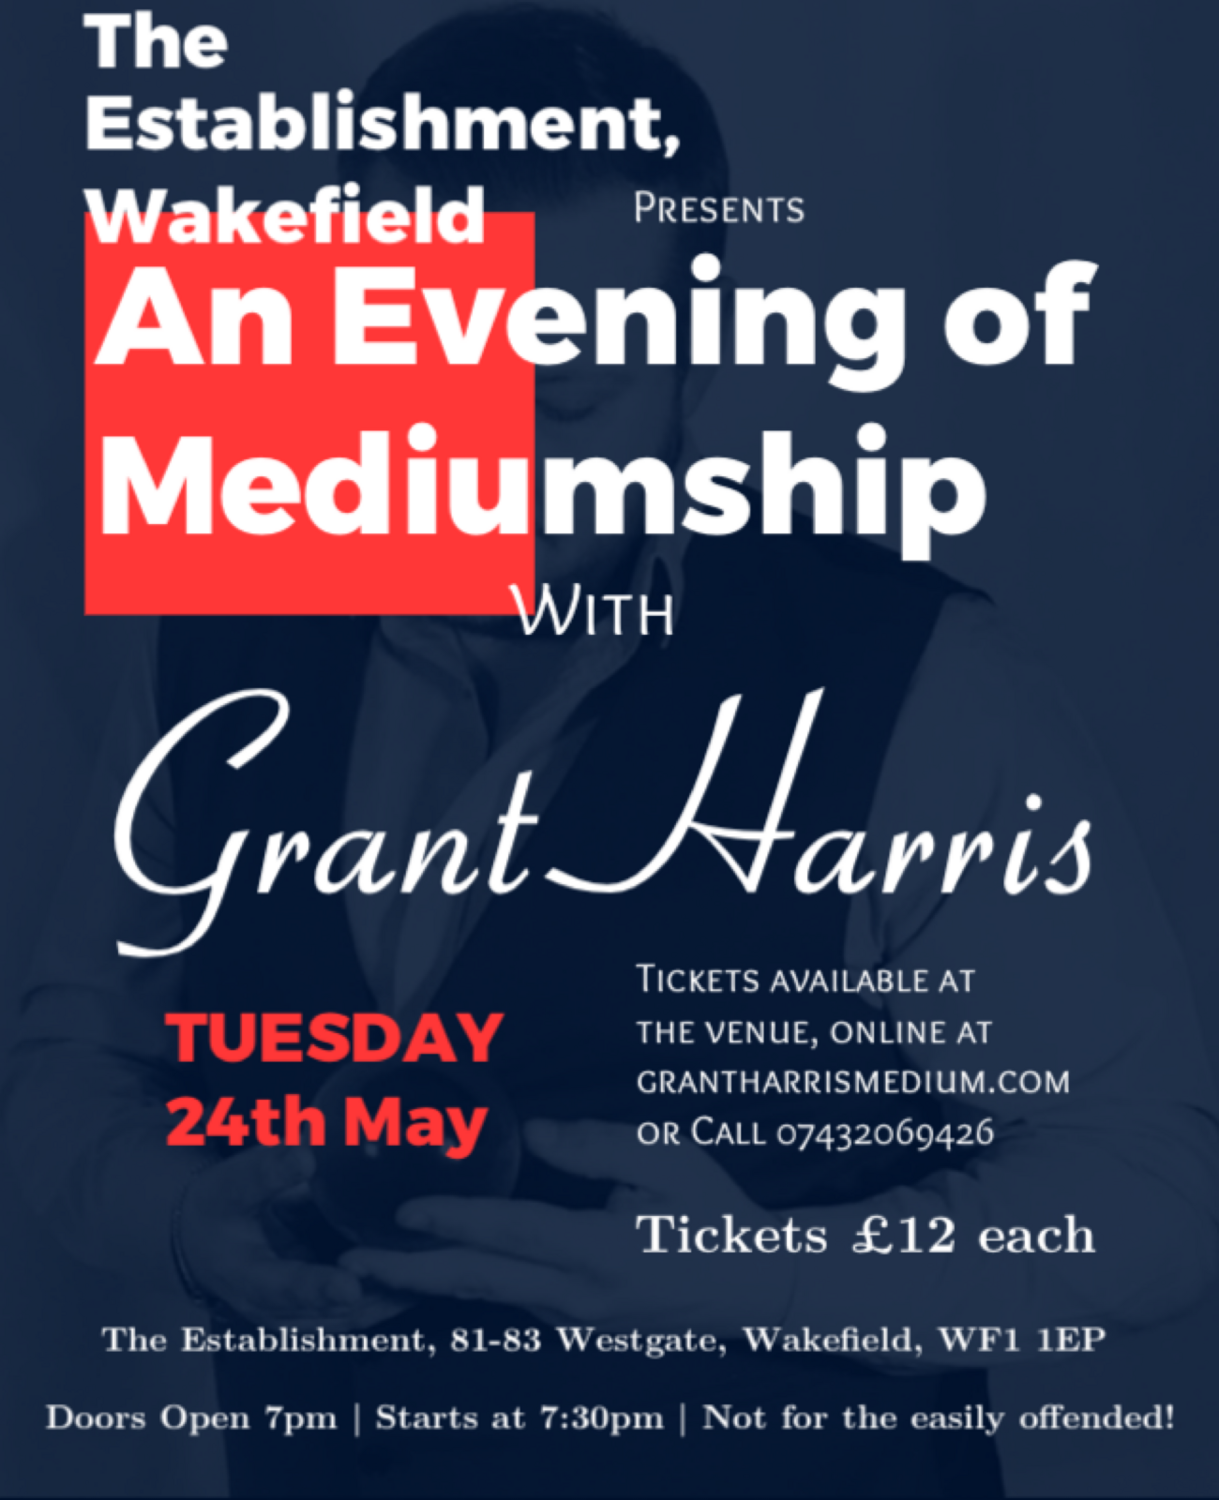 Evening of Mediumship, The Establishment, Wakefield, TUE 24th May 2022